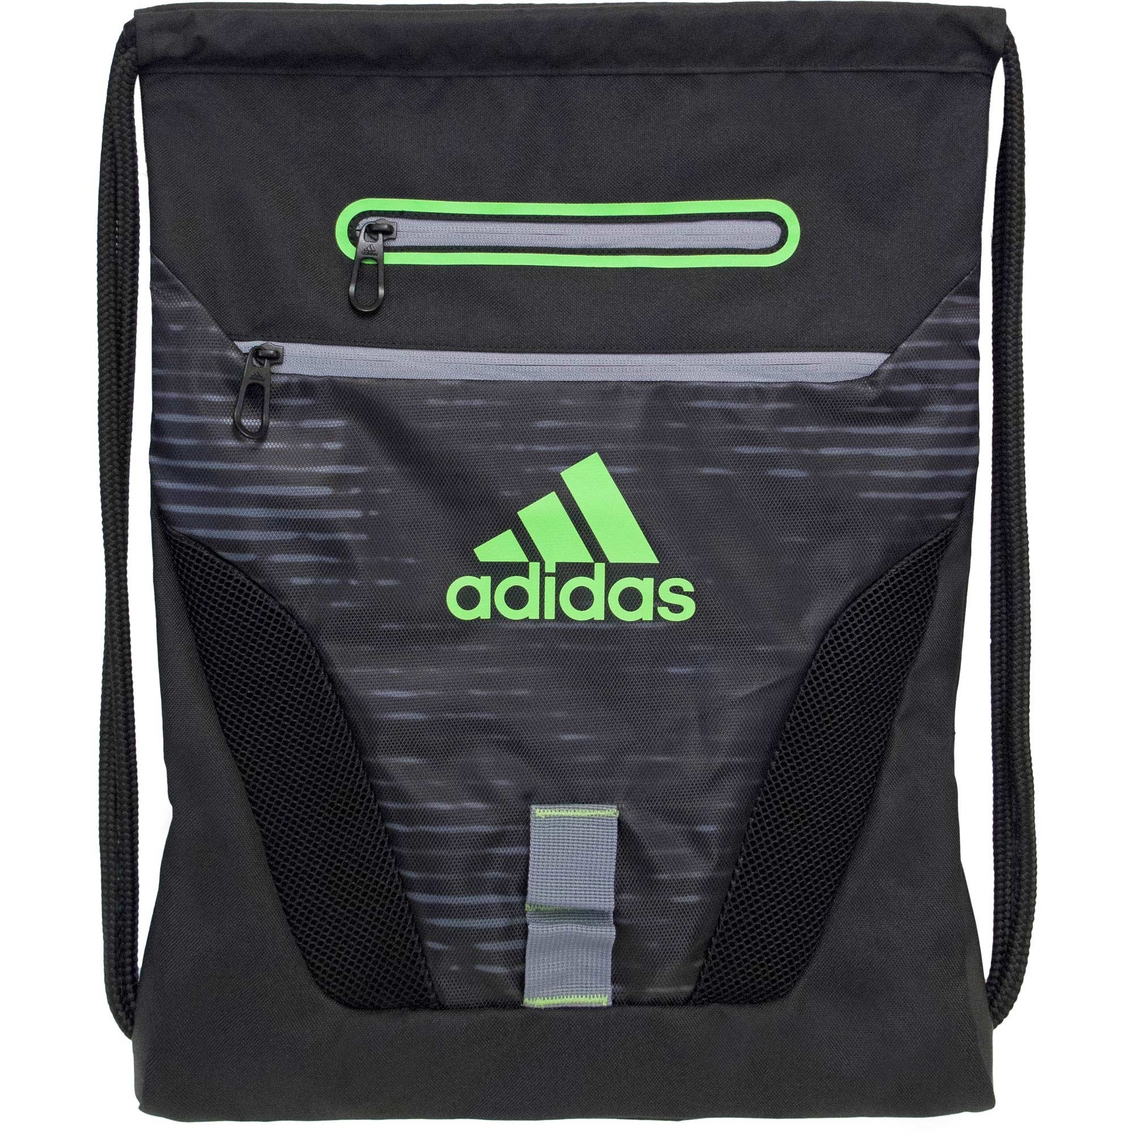 Adidas Rumble Sackpack | Backpacks 